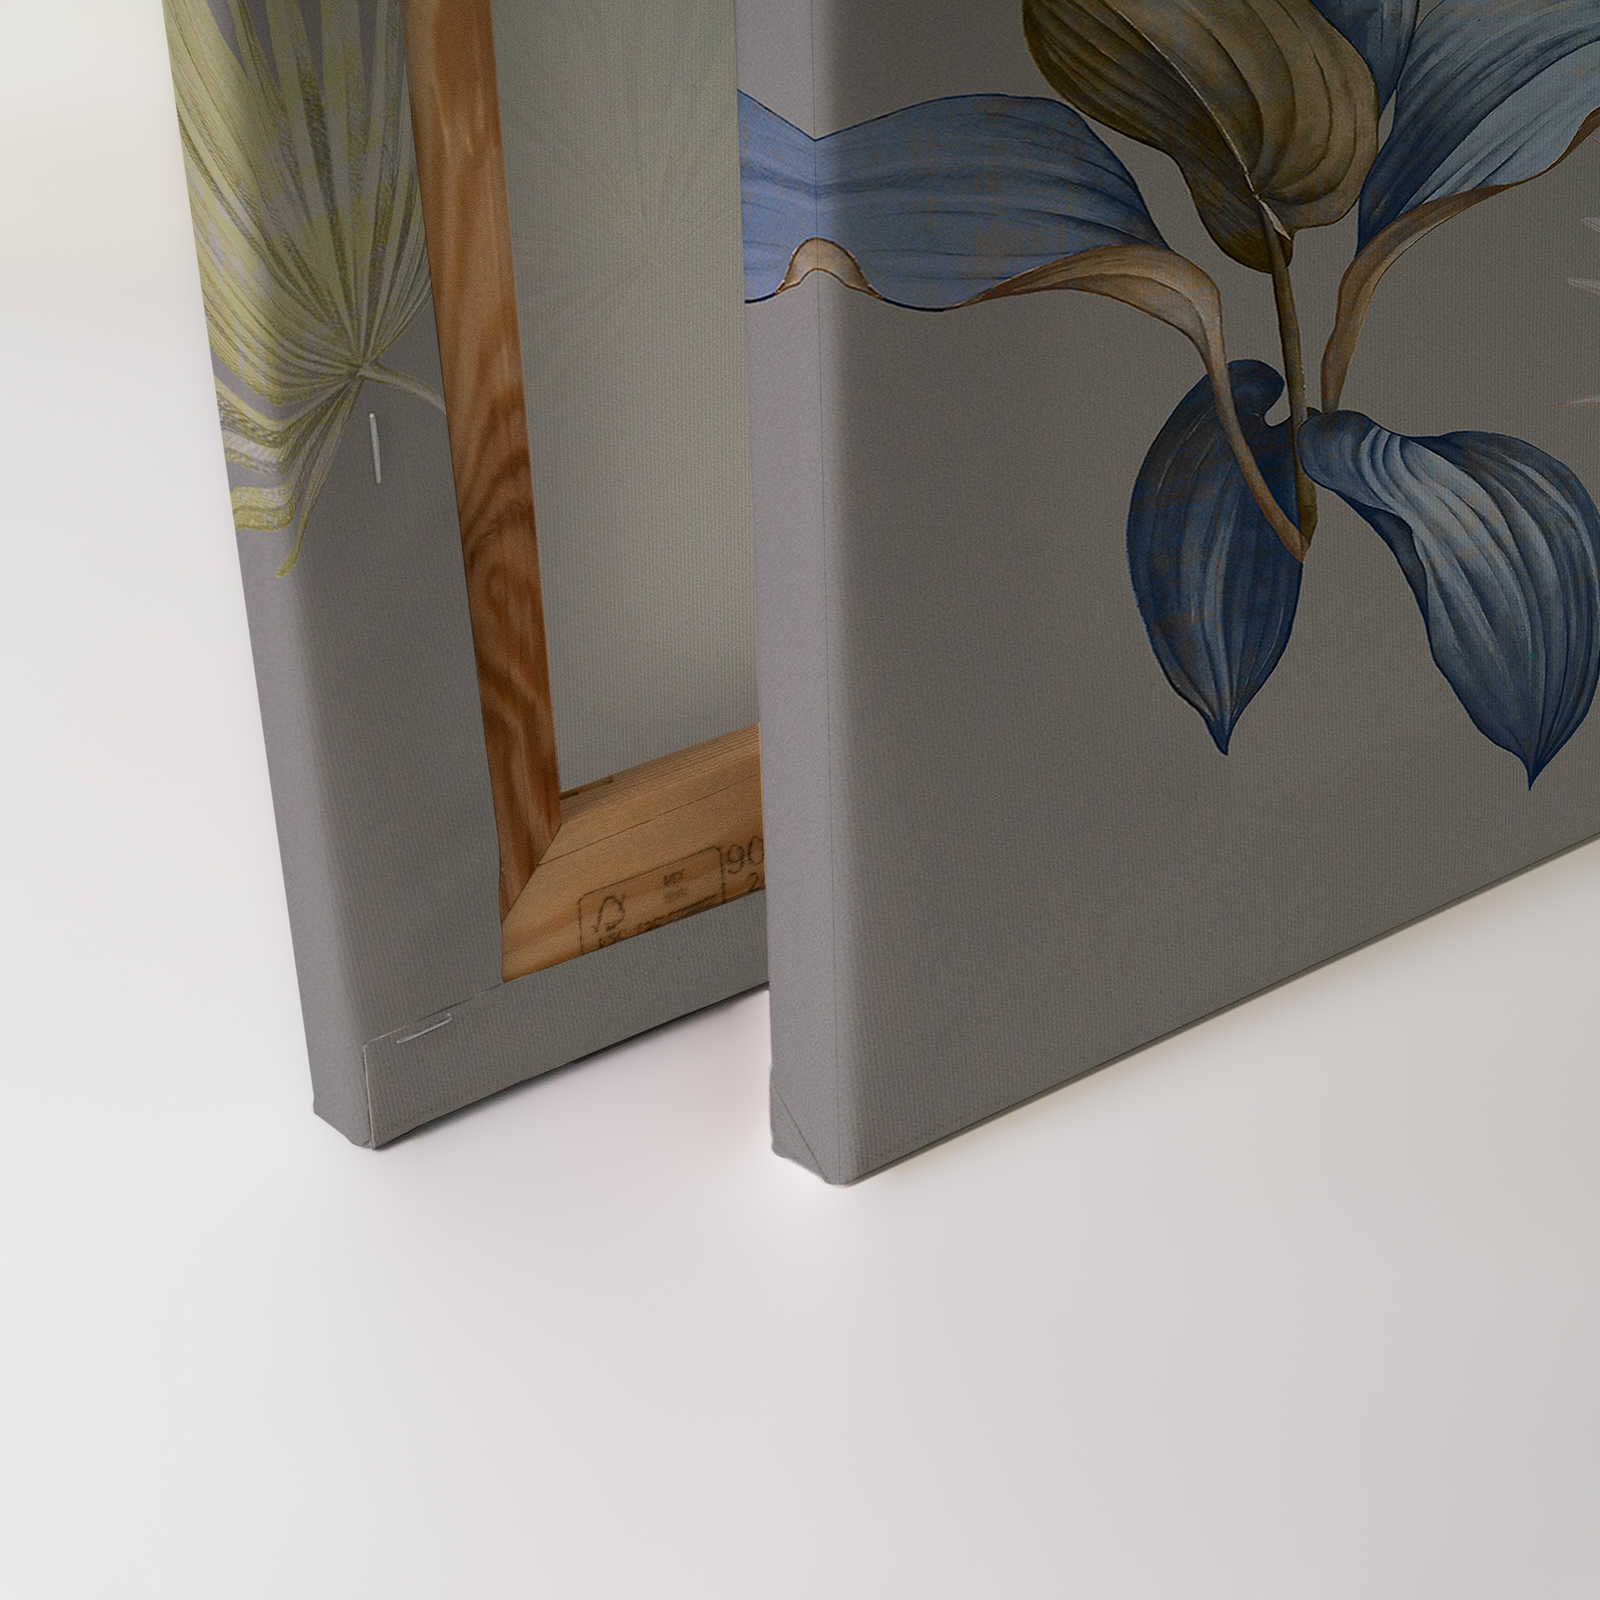             Brasilia 2 - Grey Canvas painting Leaf Design in Sage Green & Royal Blue - 1.20 m x 0.80 m
        